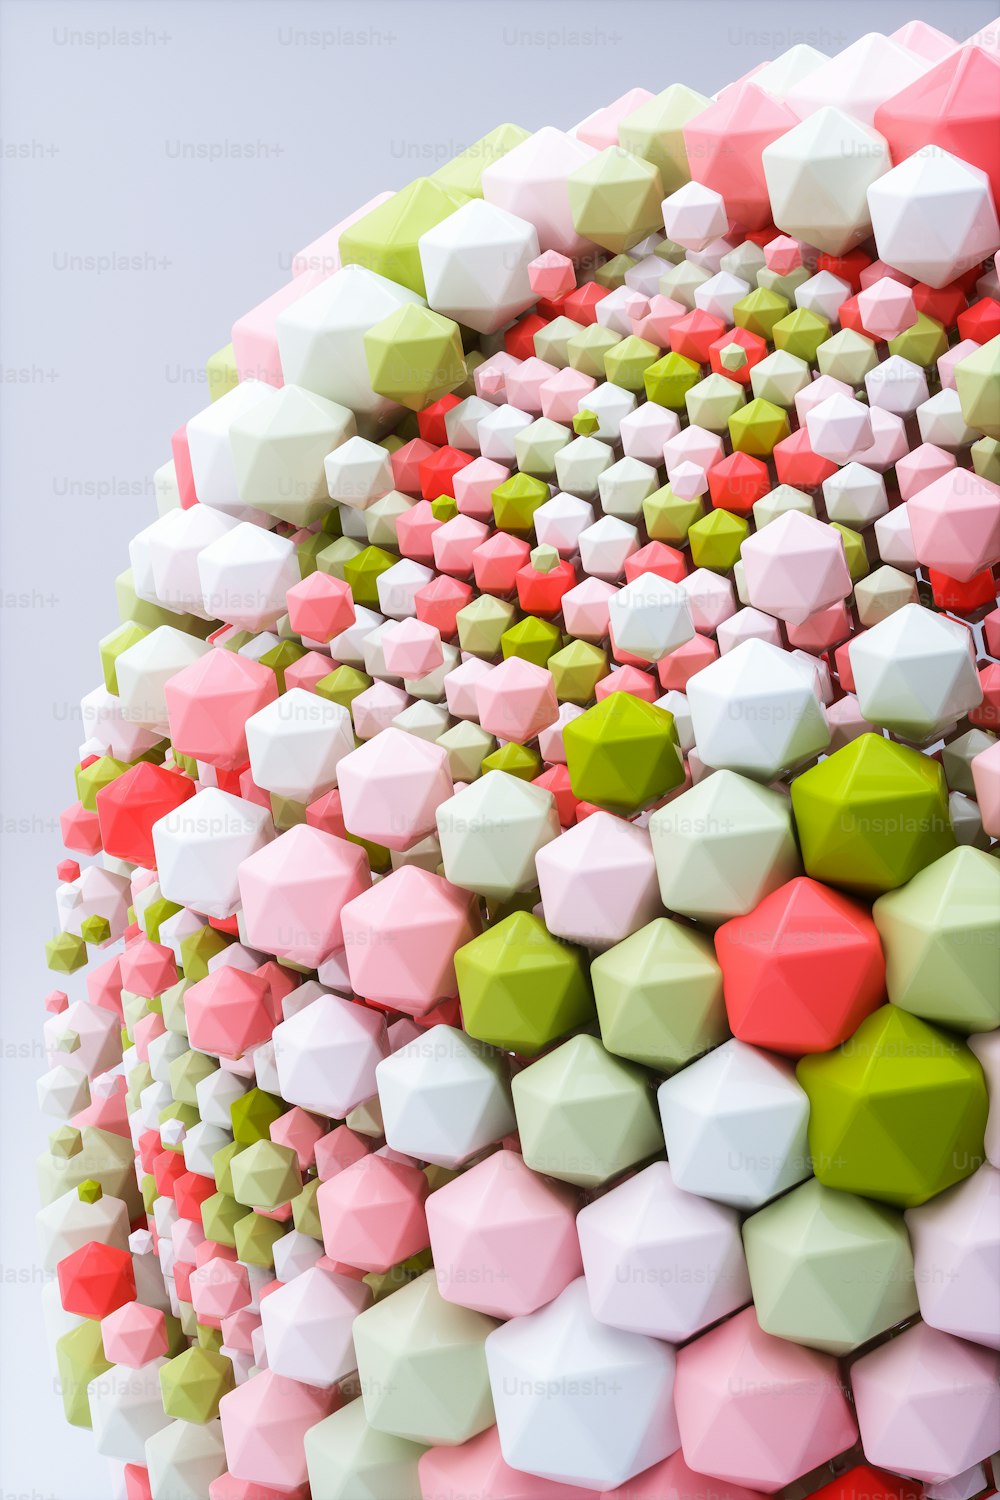 uma escultura colorida feita de cubos e formas hexagonais